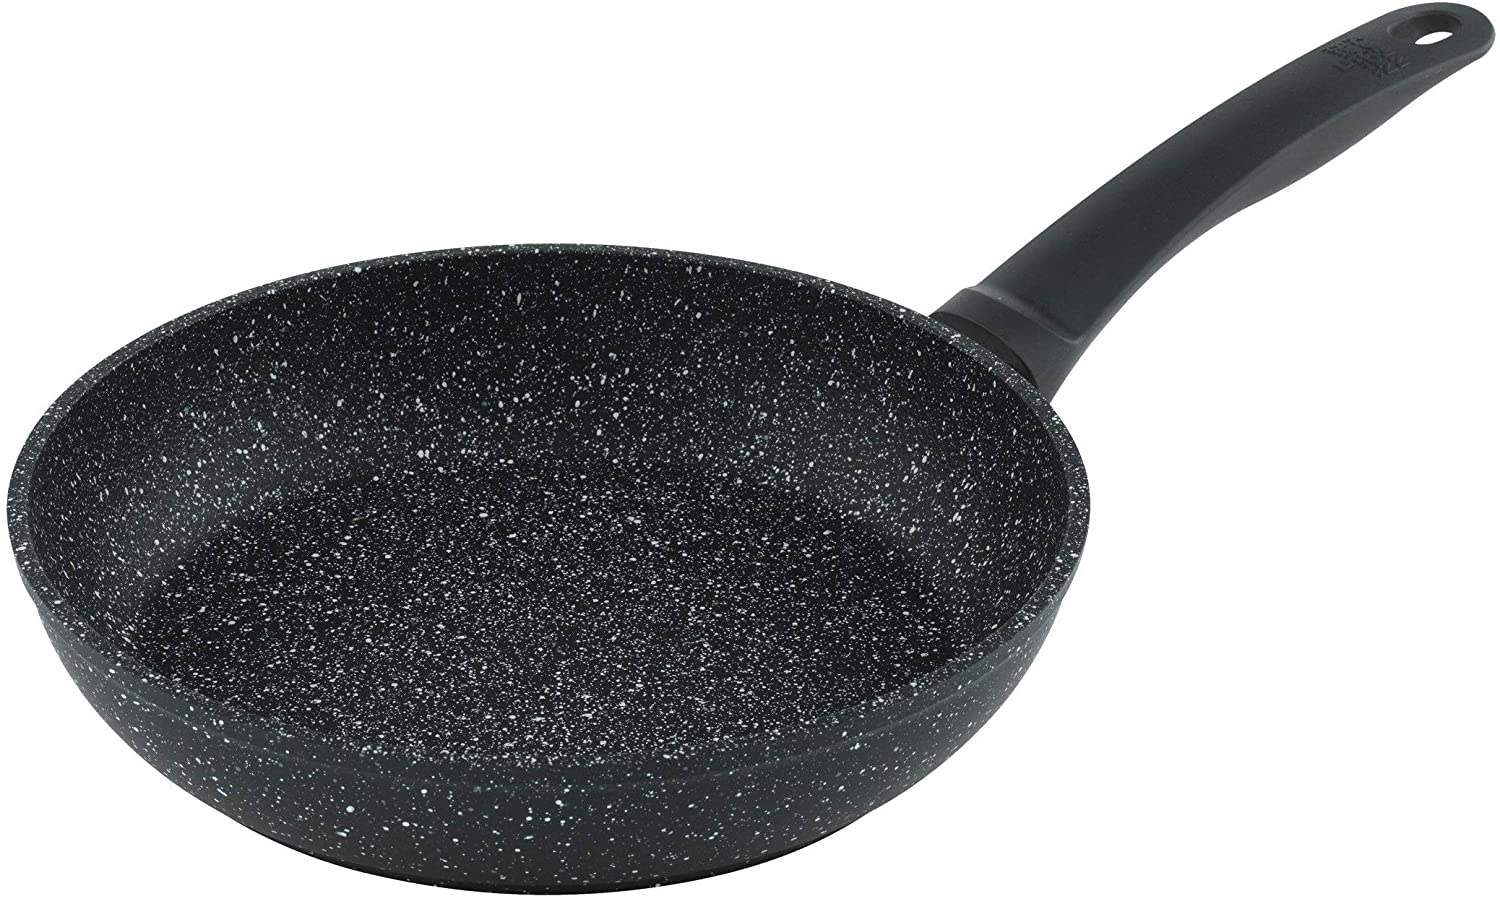 Kuhn Rikon Easy Induction Marble Frying Pan Frying Pan Induction Pan Diameter 24 cm 31557